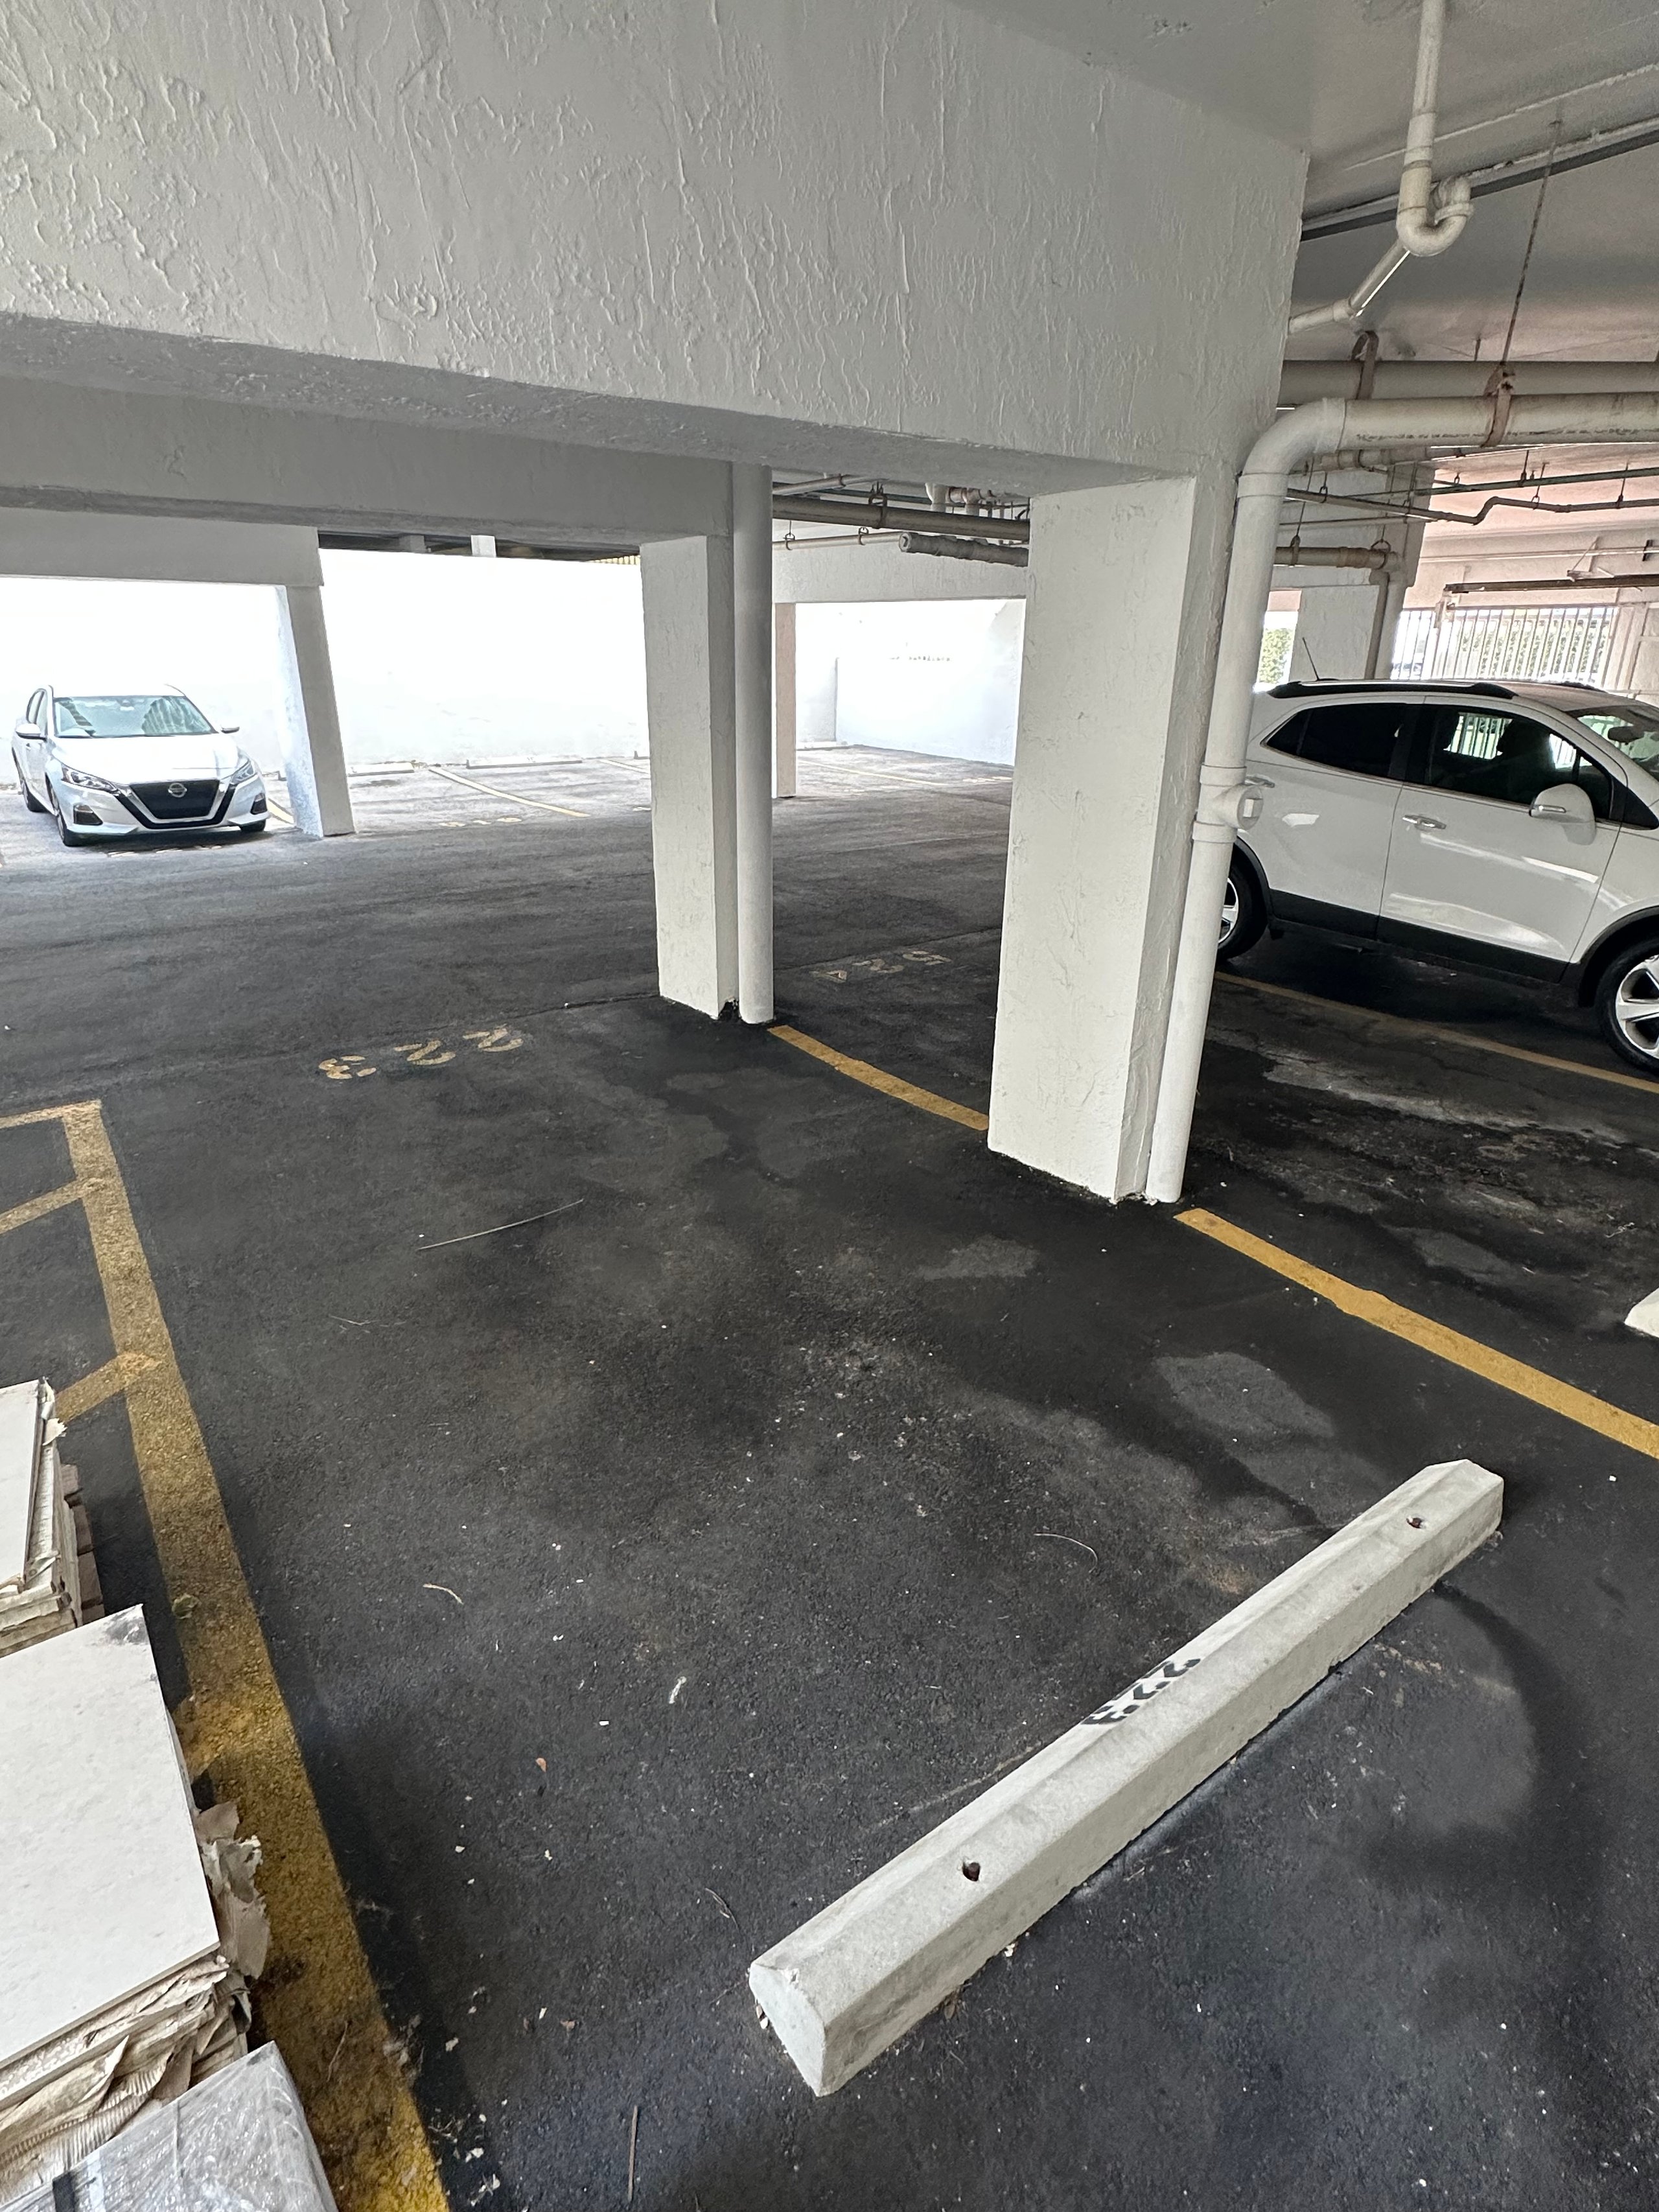 Miami Parking - Find. Compare. Save.